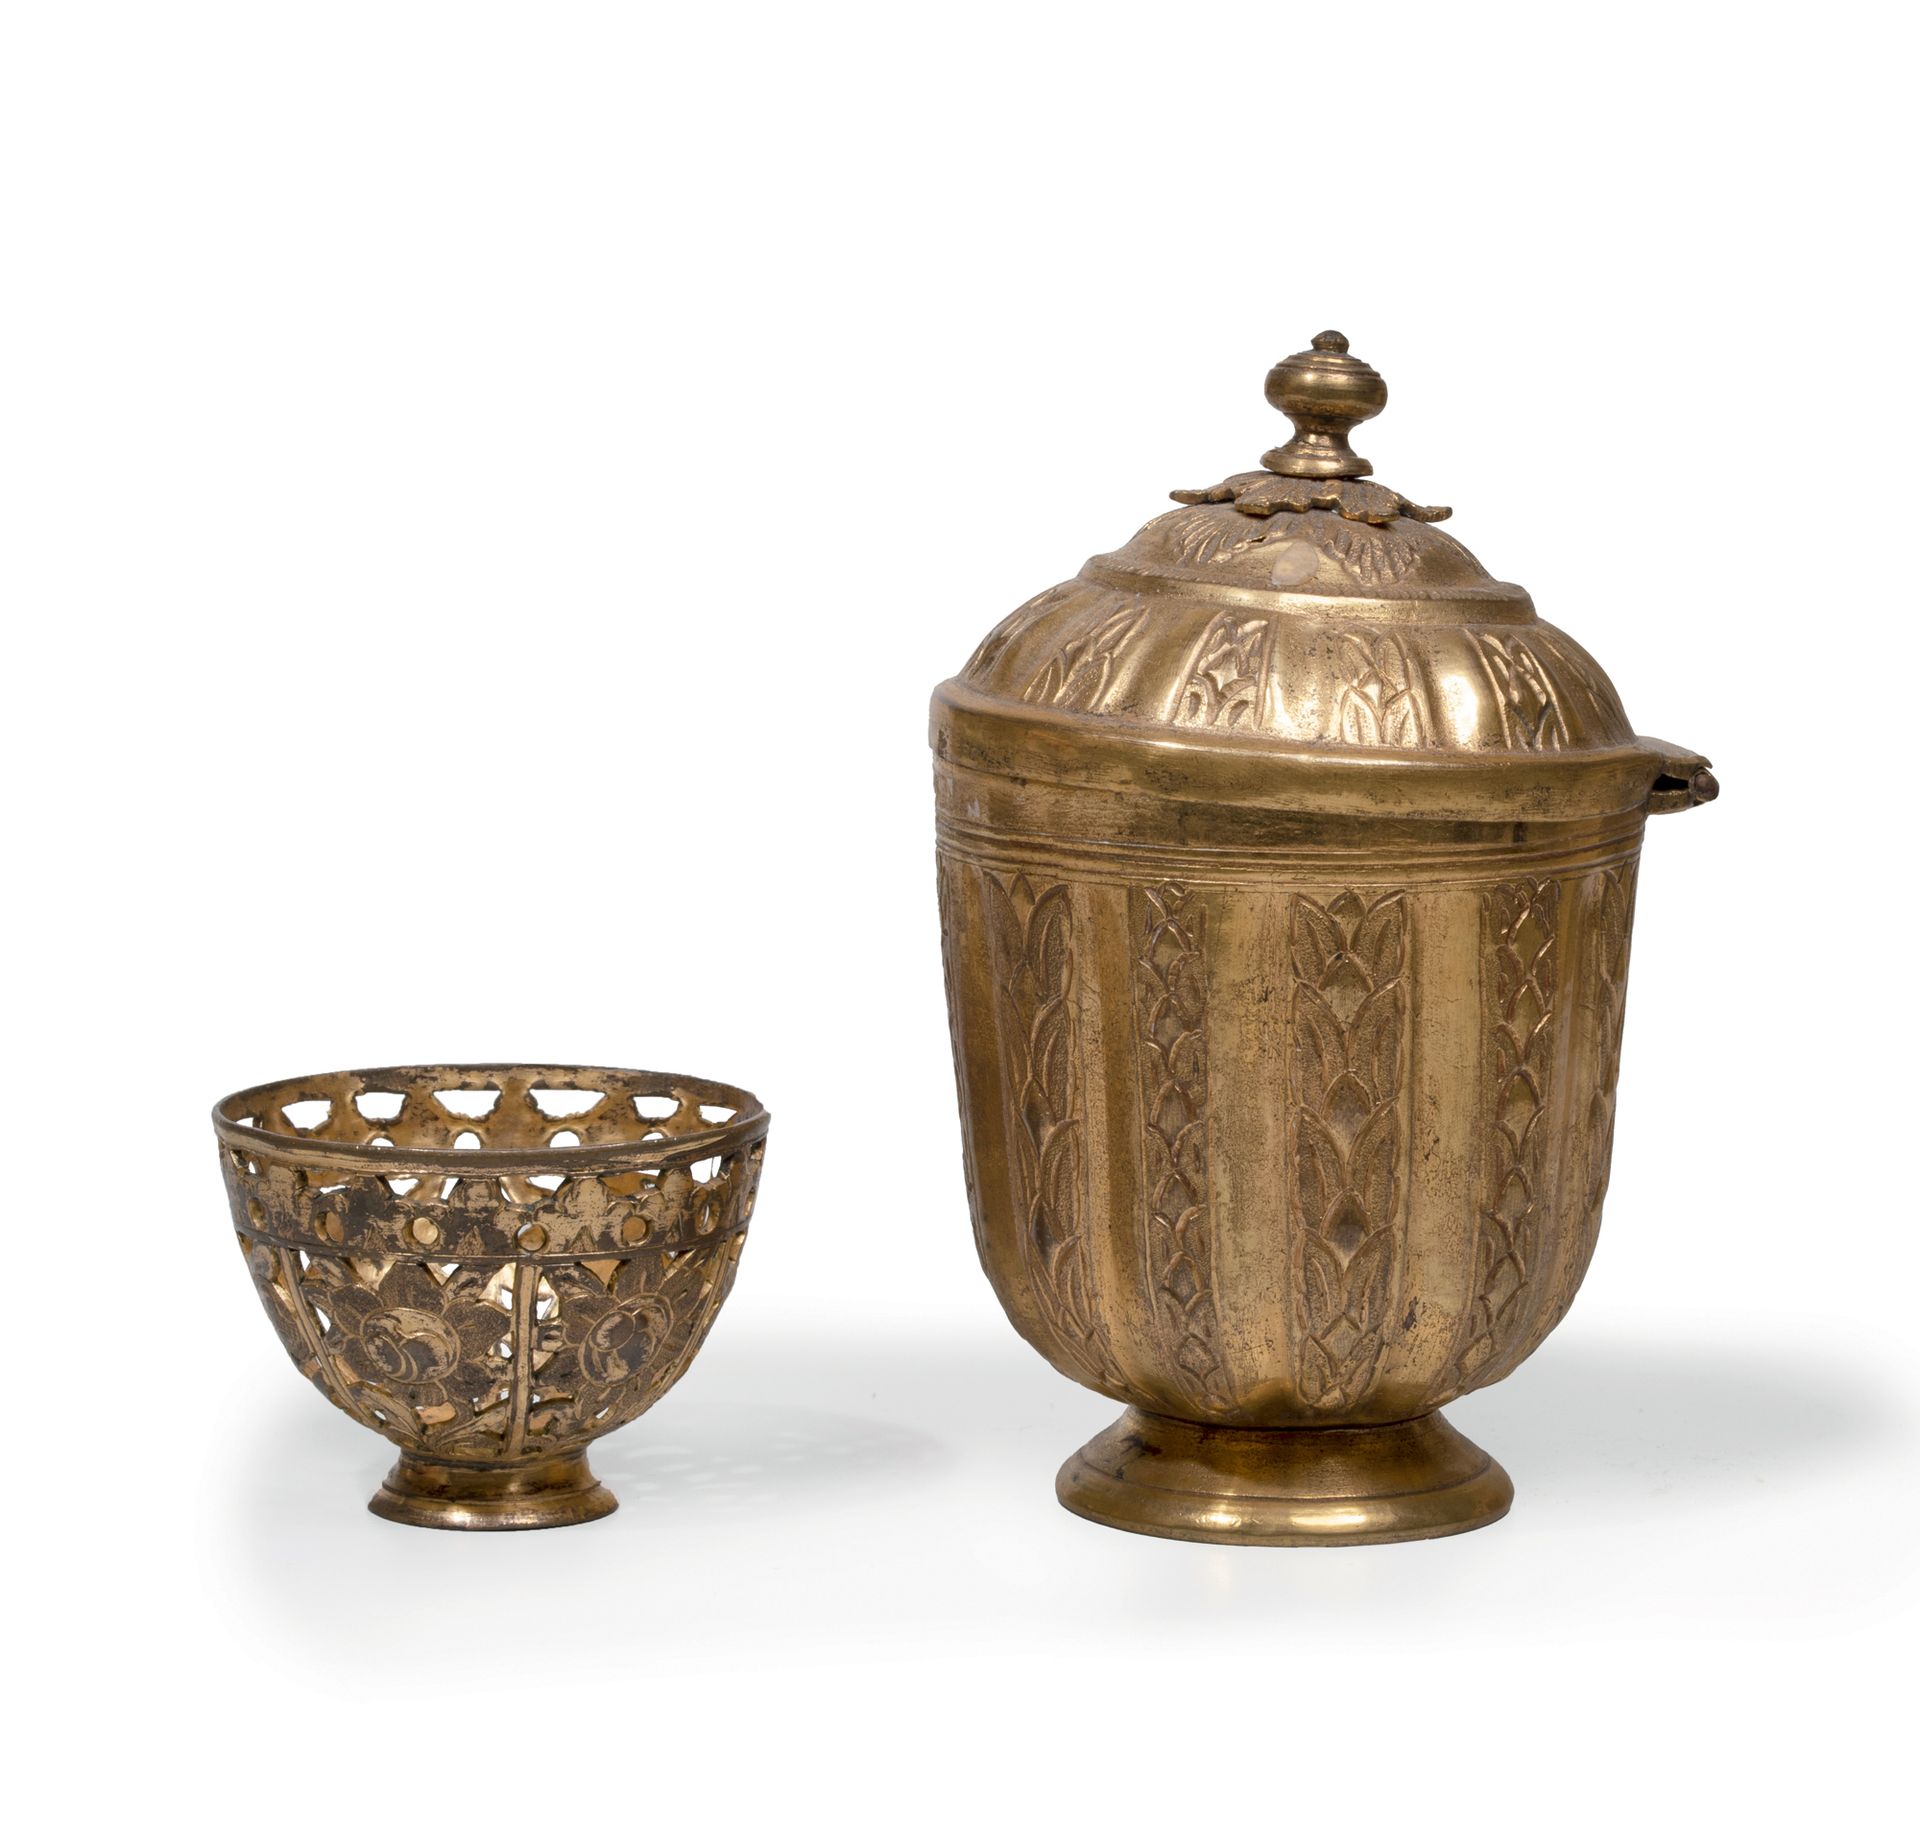 Null 一个墓碑式糖碗和一个Zarf
水银鎏金铜 - 墓碑
土耳其，18世纪末，奥斯曼帝国 糖碗的高度：12.5；Zarf的高度：4.5厘米
这个墓碑式糖碗呈&hellip;